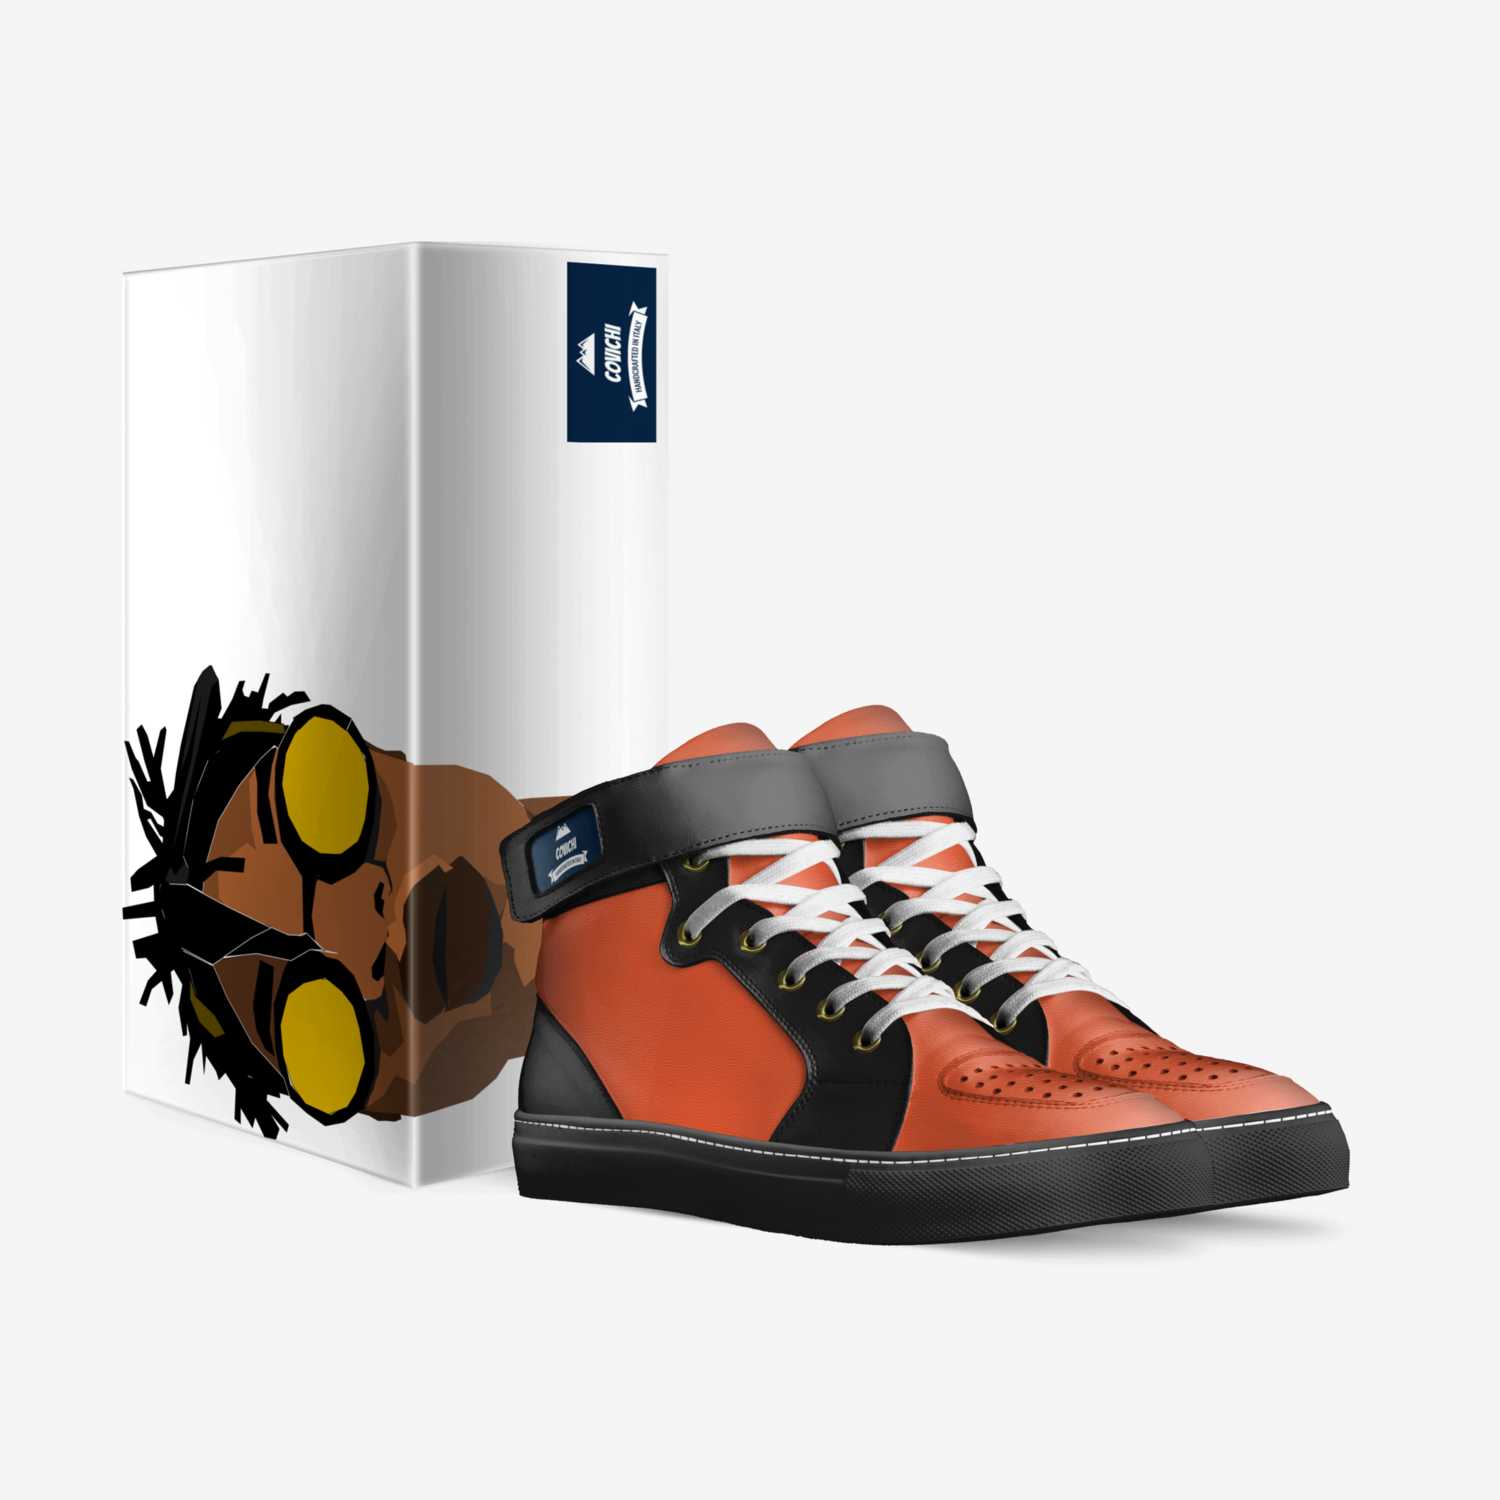 Covichi custom made in Italy shoes by Santana Doe | Box view